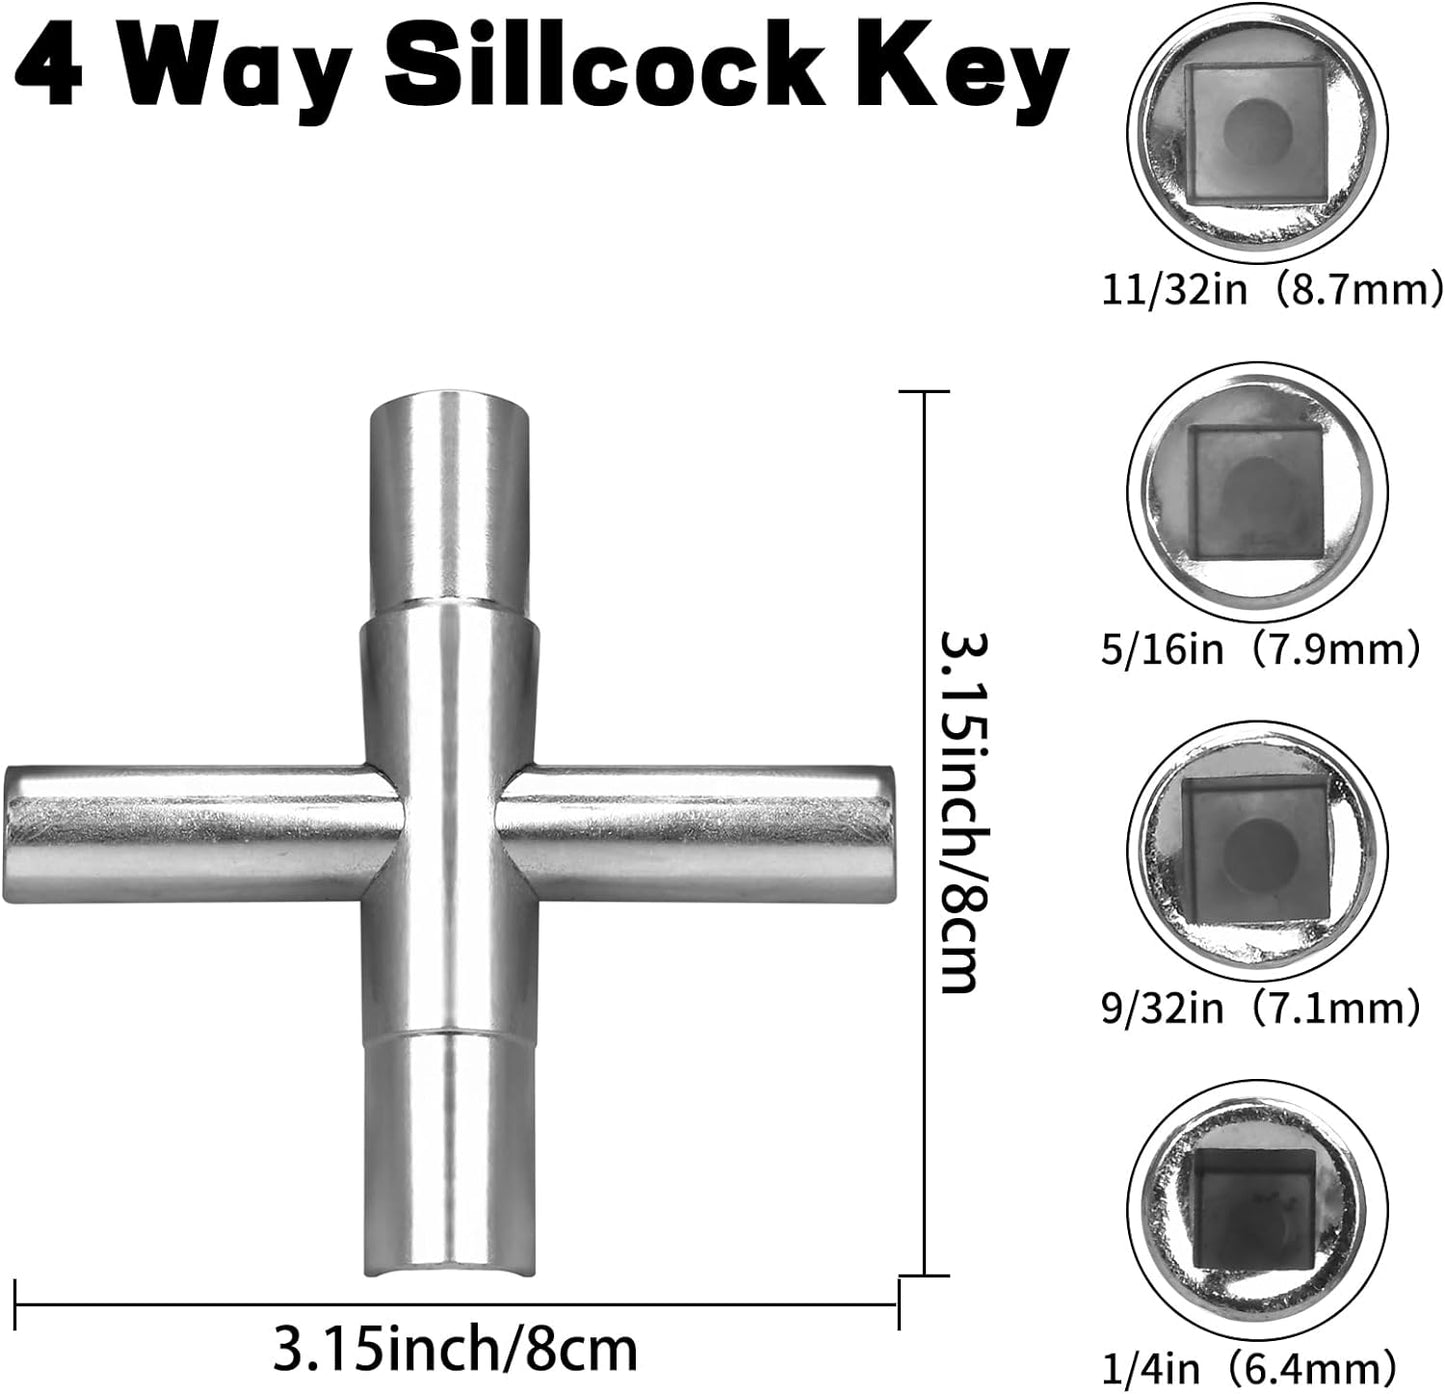 4 Way Sillcock Key